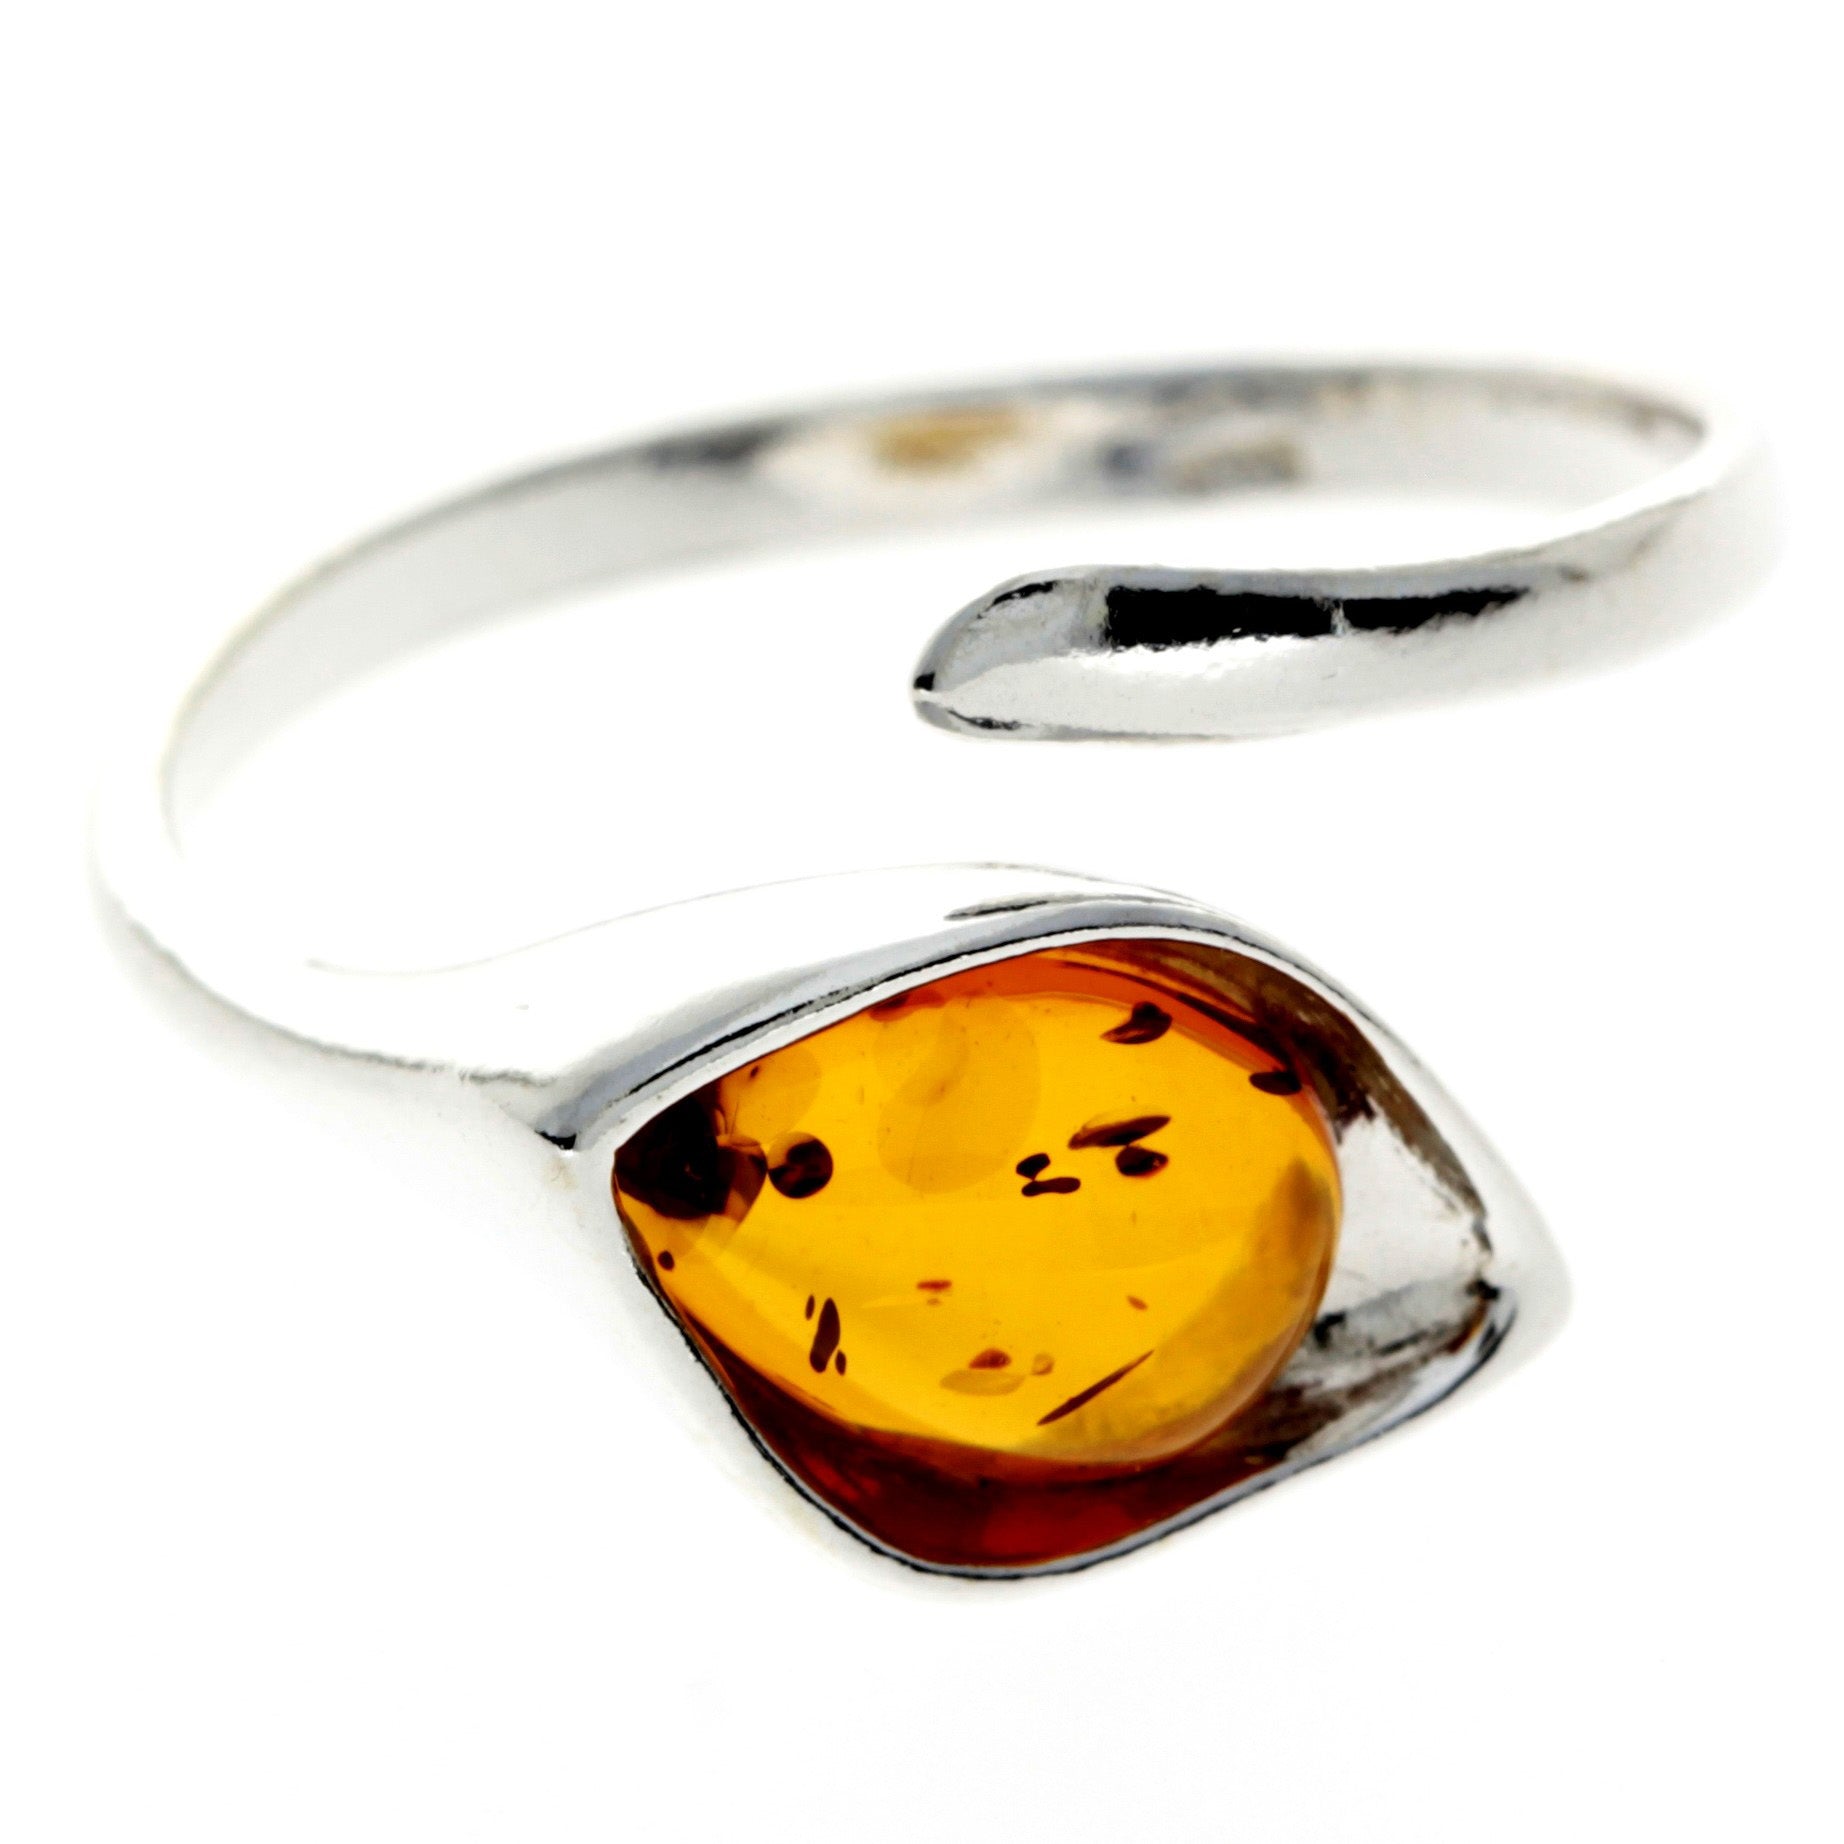 925 Sterling Silver & Baltic Amber Modern Designer Ring - GL728A2